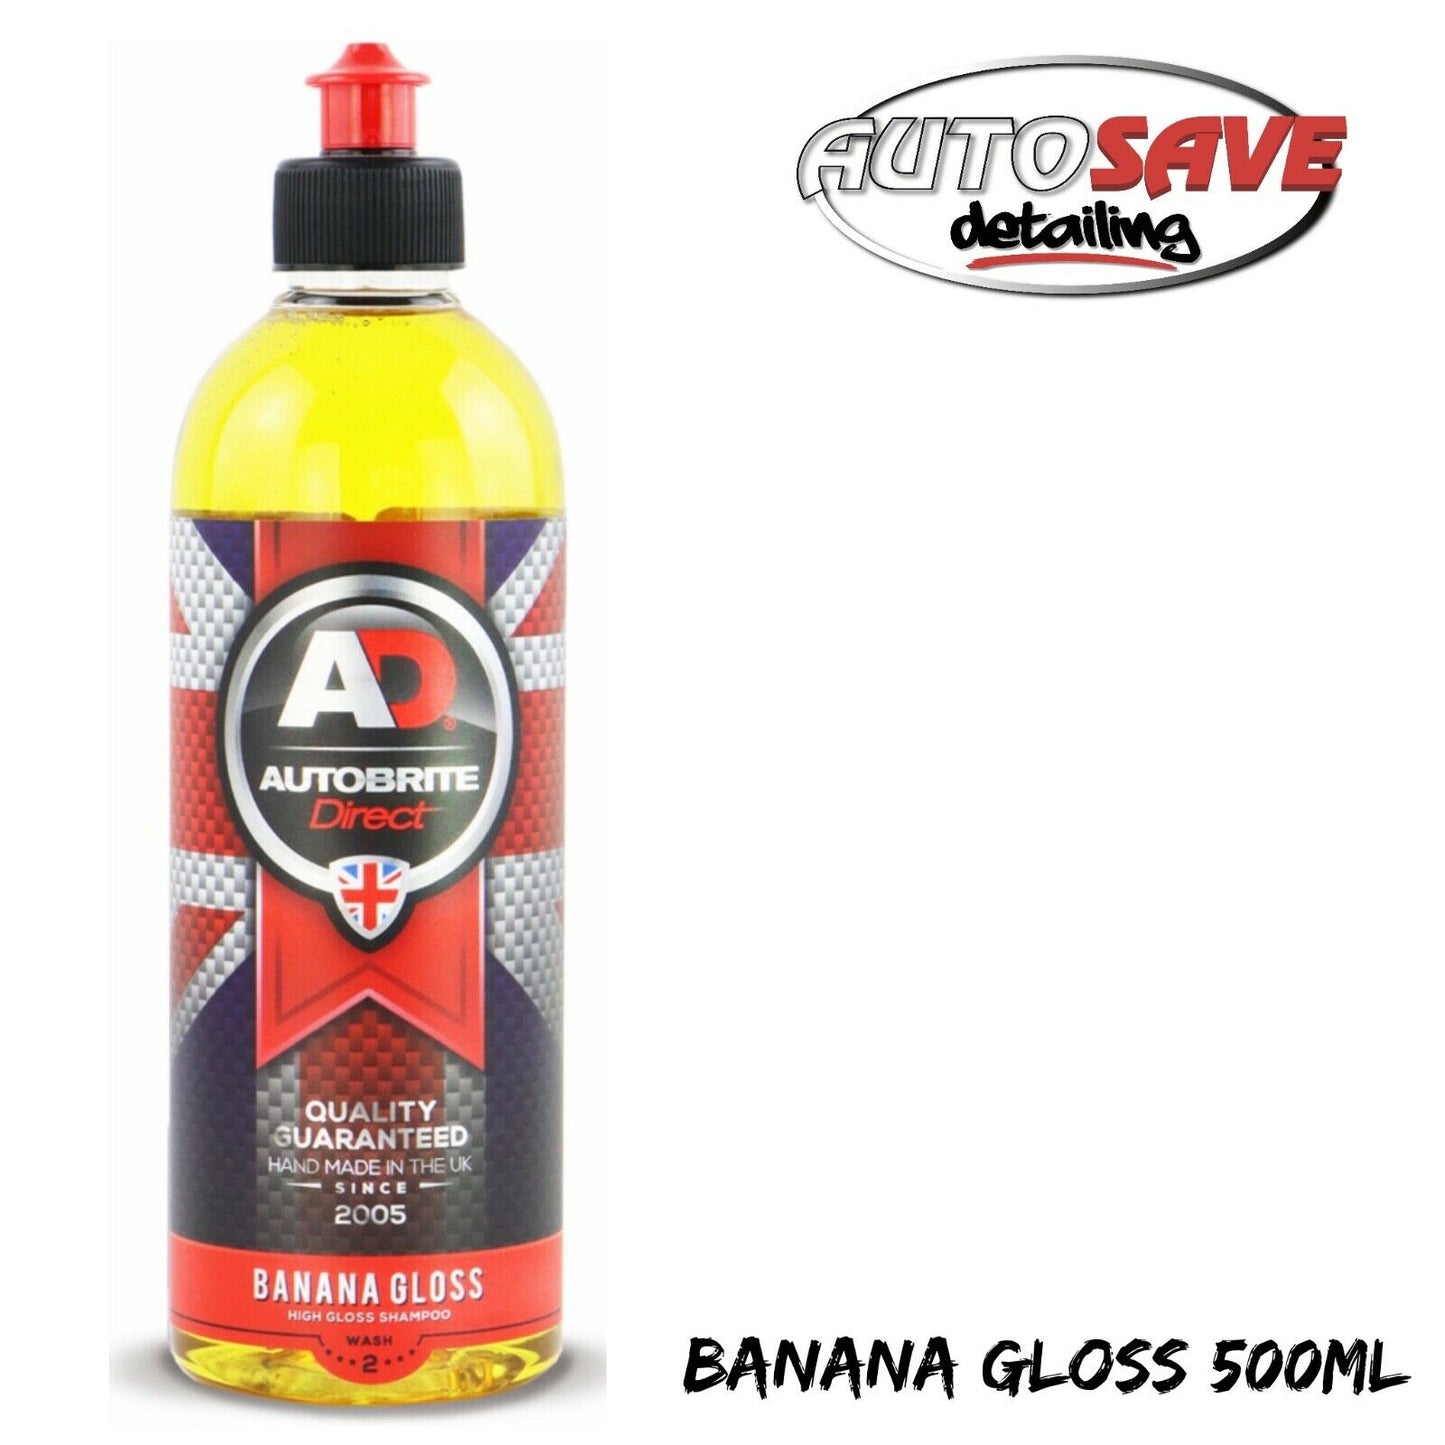 Autobrite Direct Banana gloss concentrated shampoo